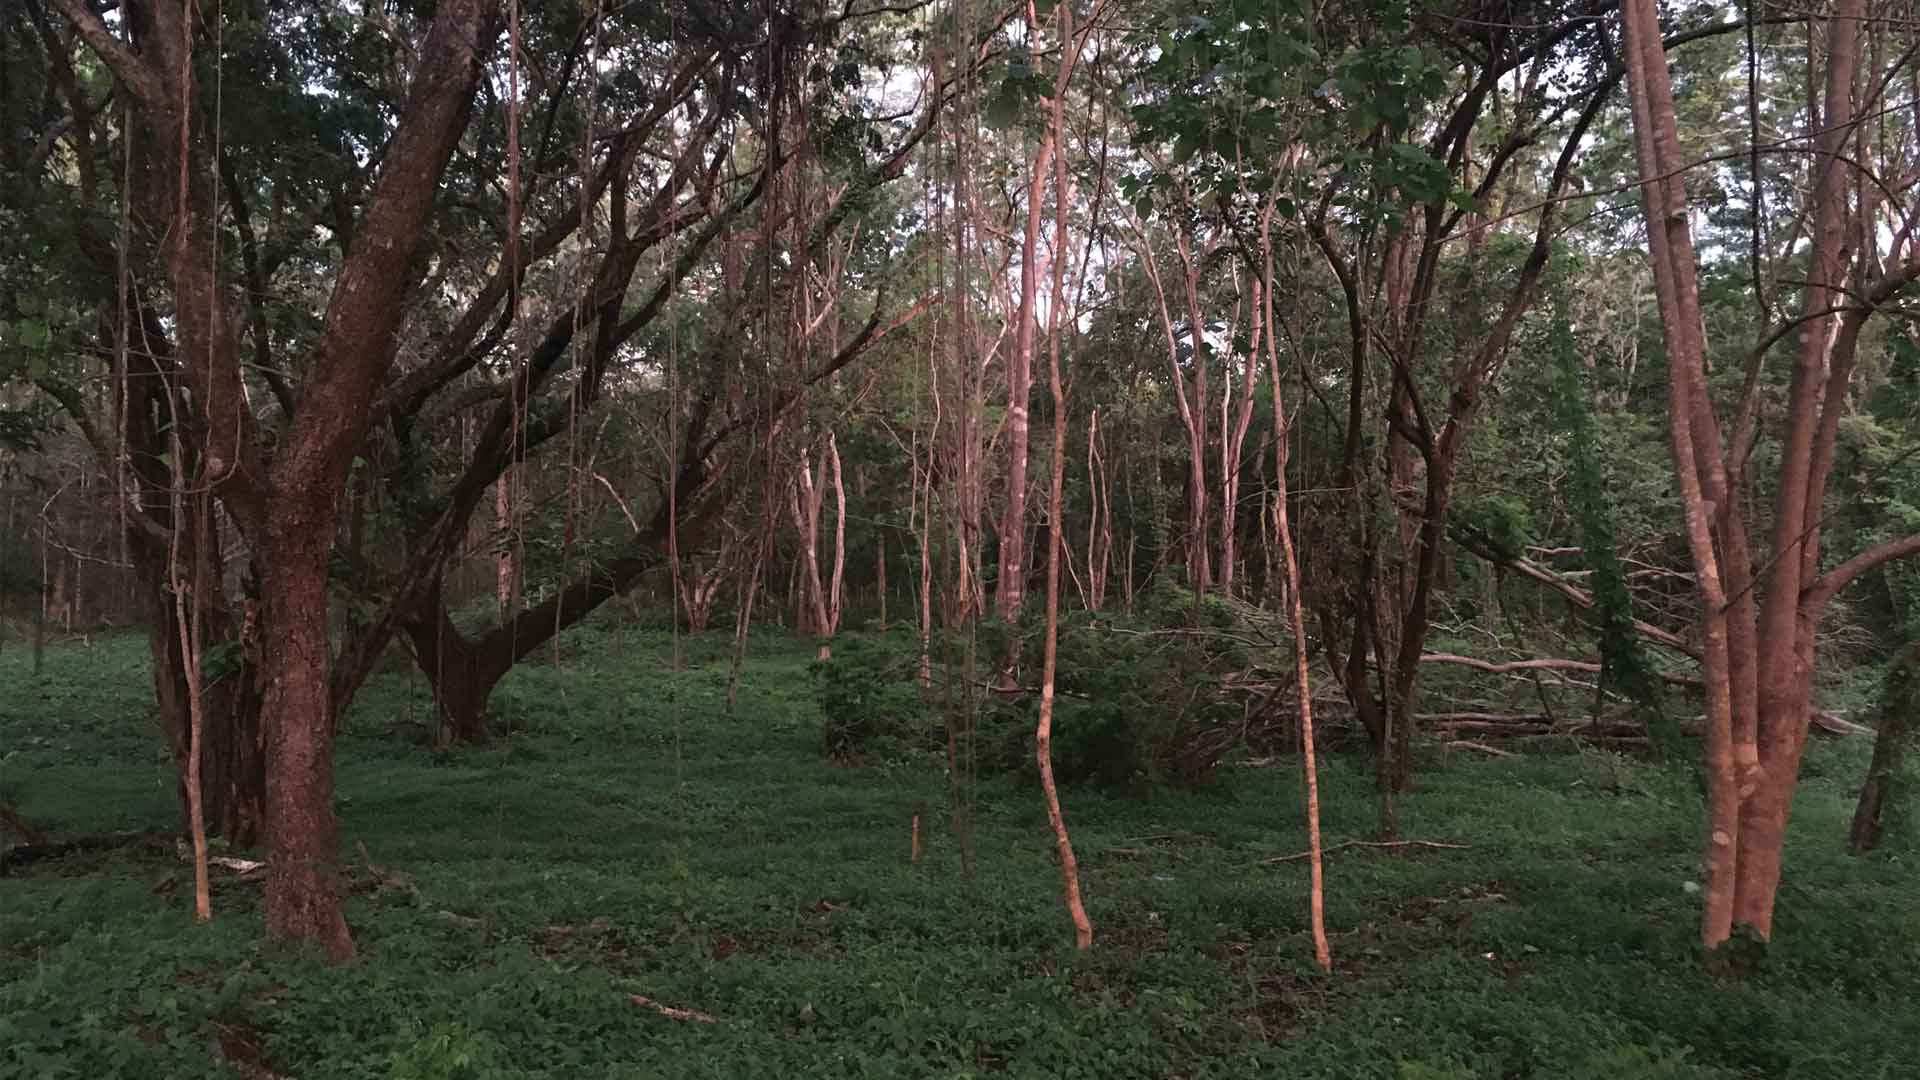 Trees, vines, and lianas over grassy jungle floor in Playa Grande, Guanacaste, Costa Rica